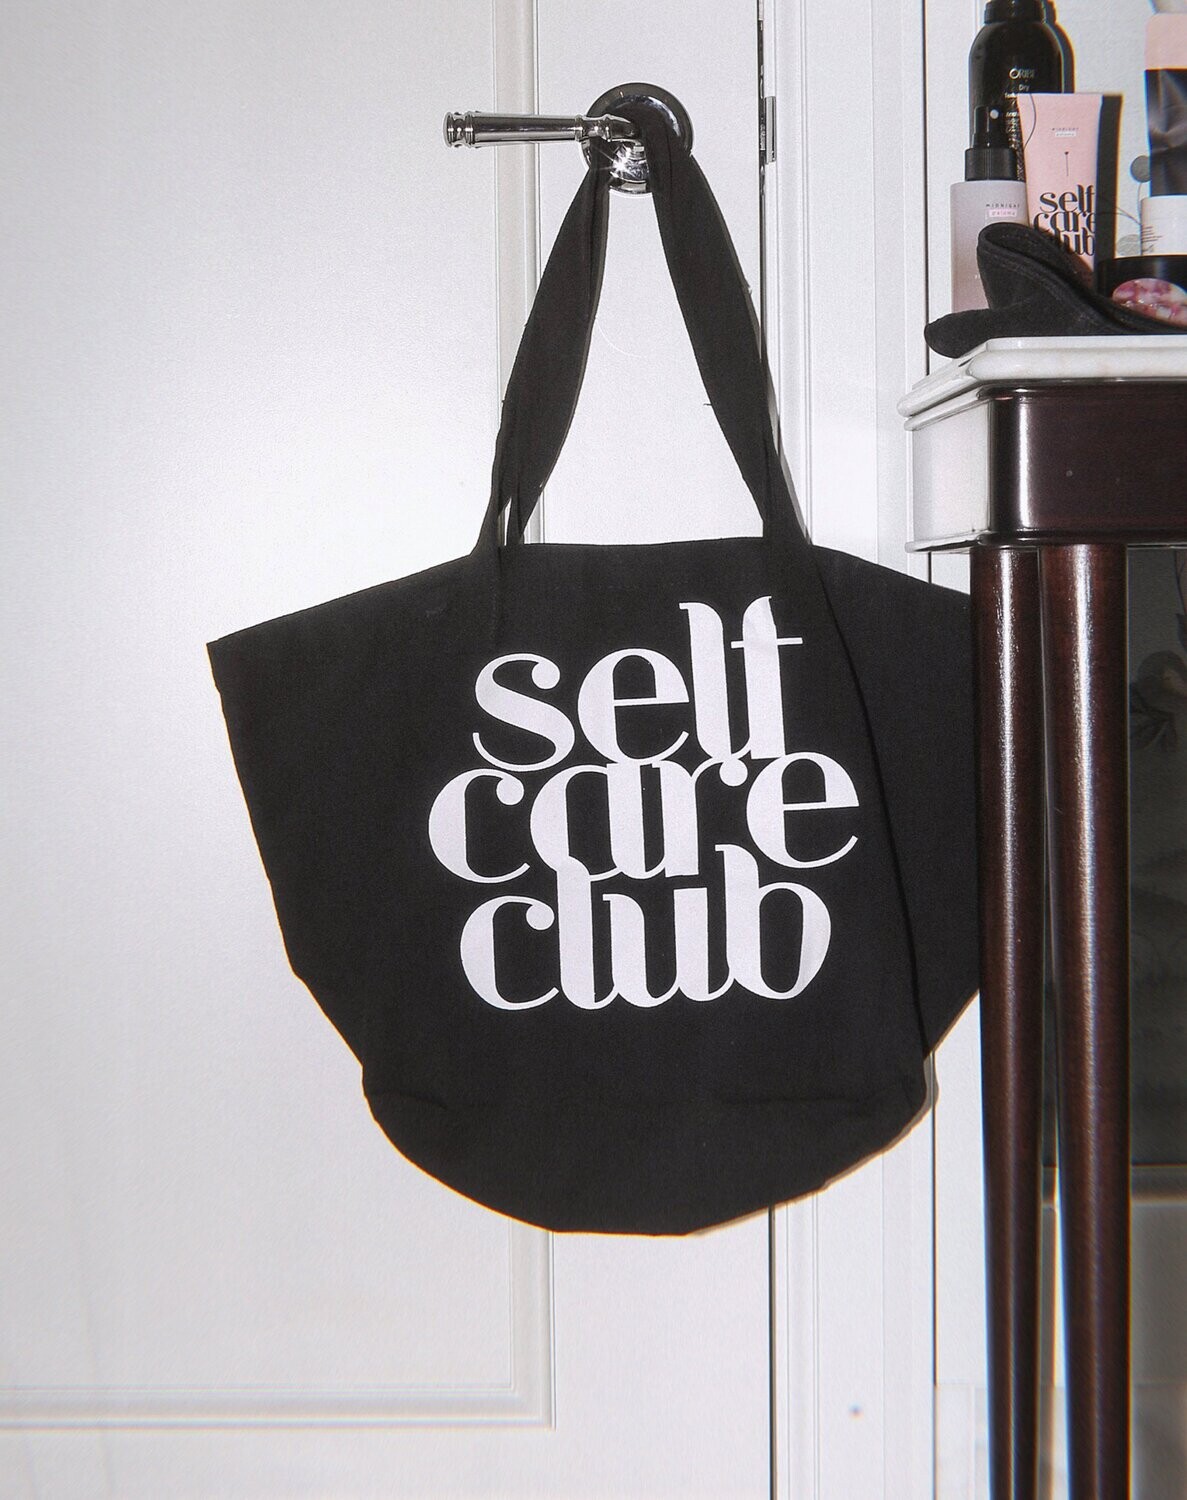 Self Care Club Tote Bag